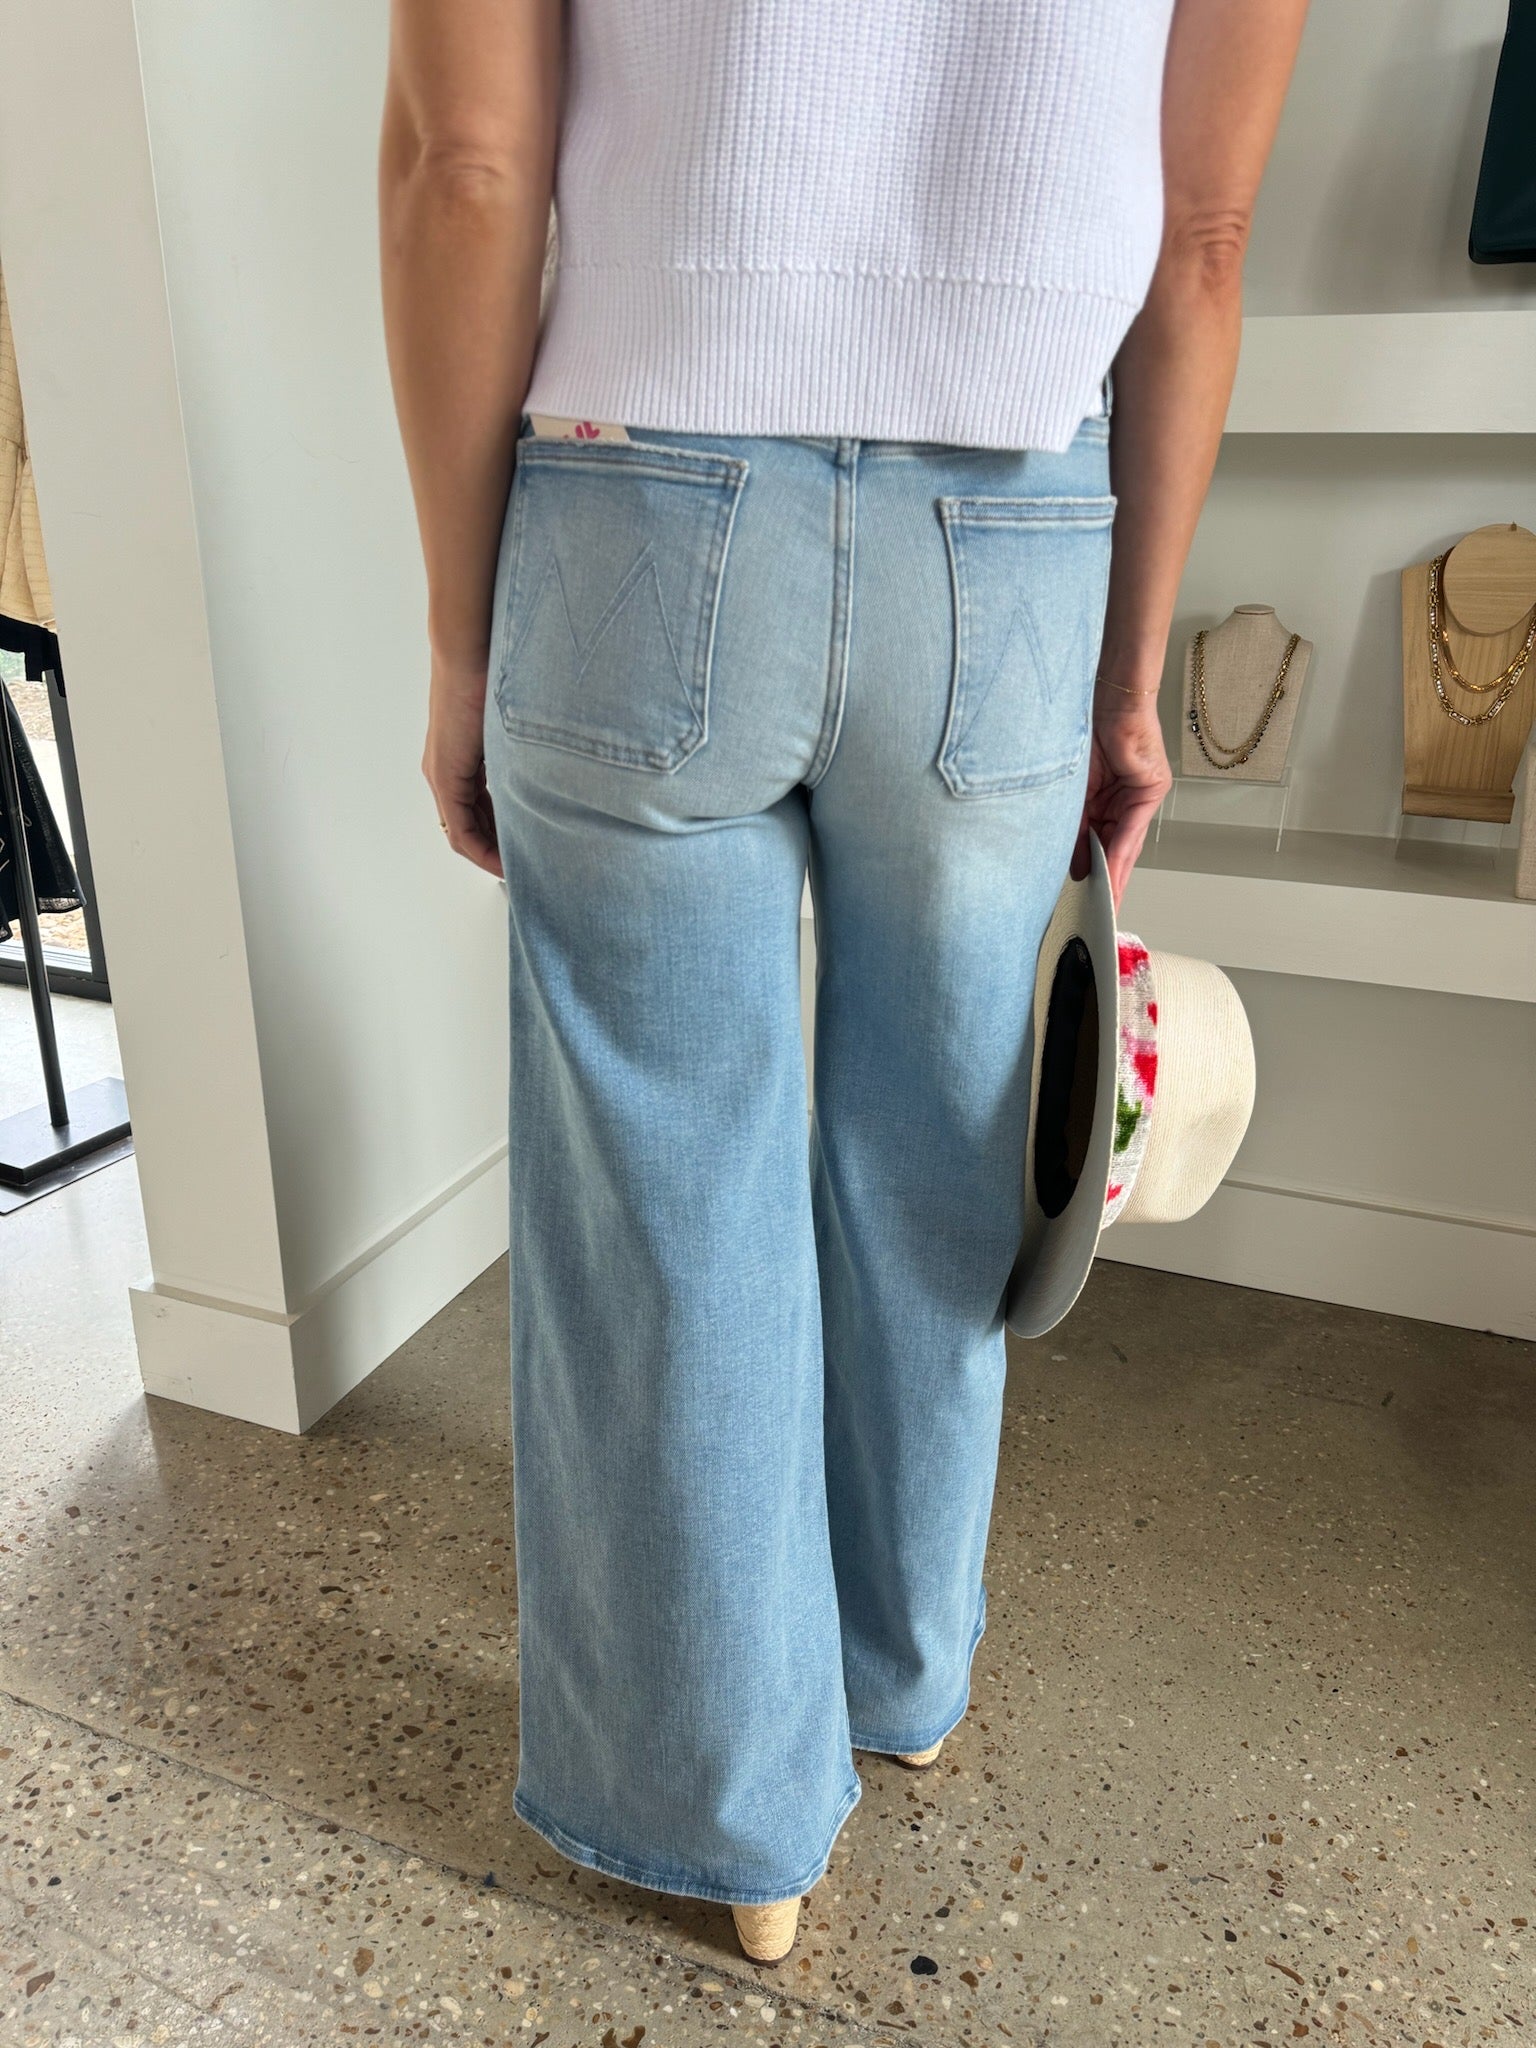 California Lil Patch Pocket Undercover Sneak Jeans - Amor Lafayette